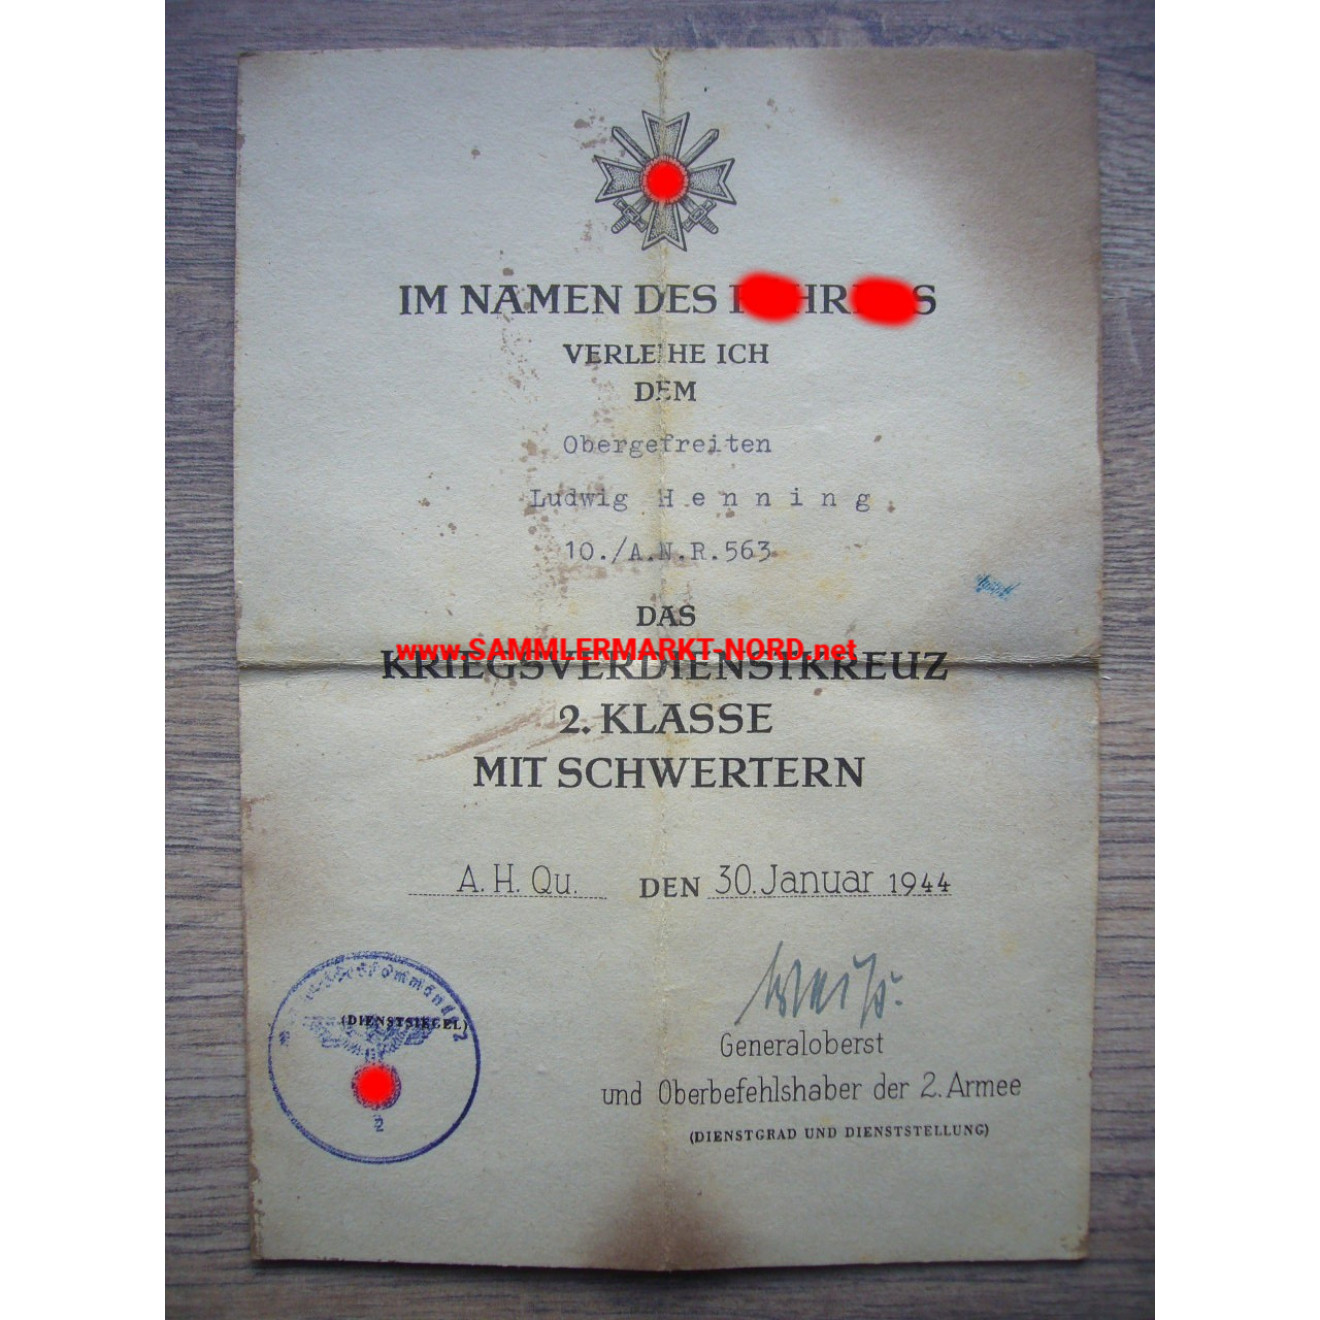 KVK Certificate - 2nd Army - Generaloberst WALTER WEIß - Autograph